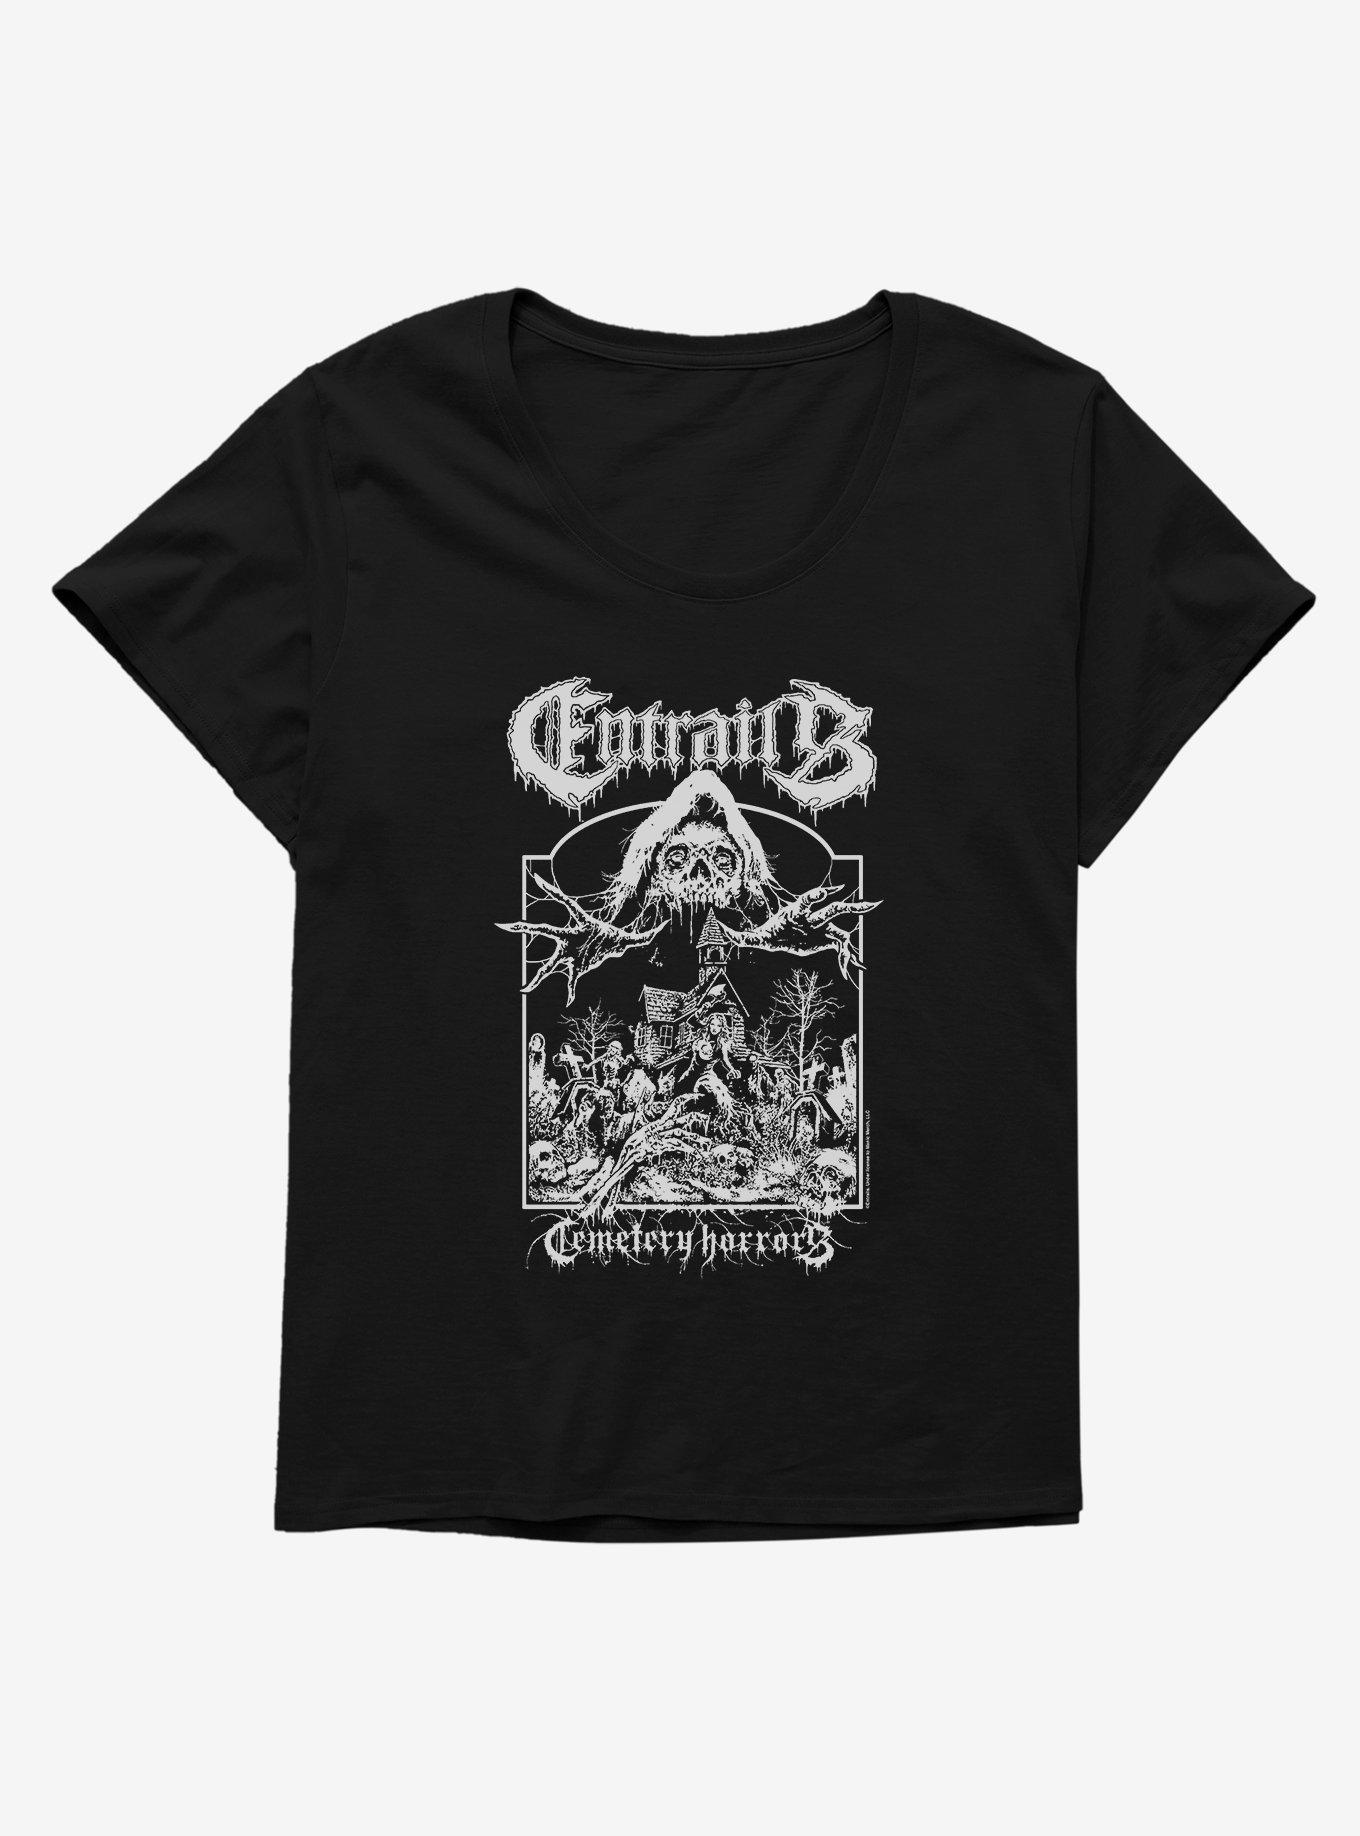 Entrails Cemetery Horrors Girls T-Shirt Plus